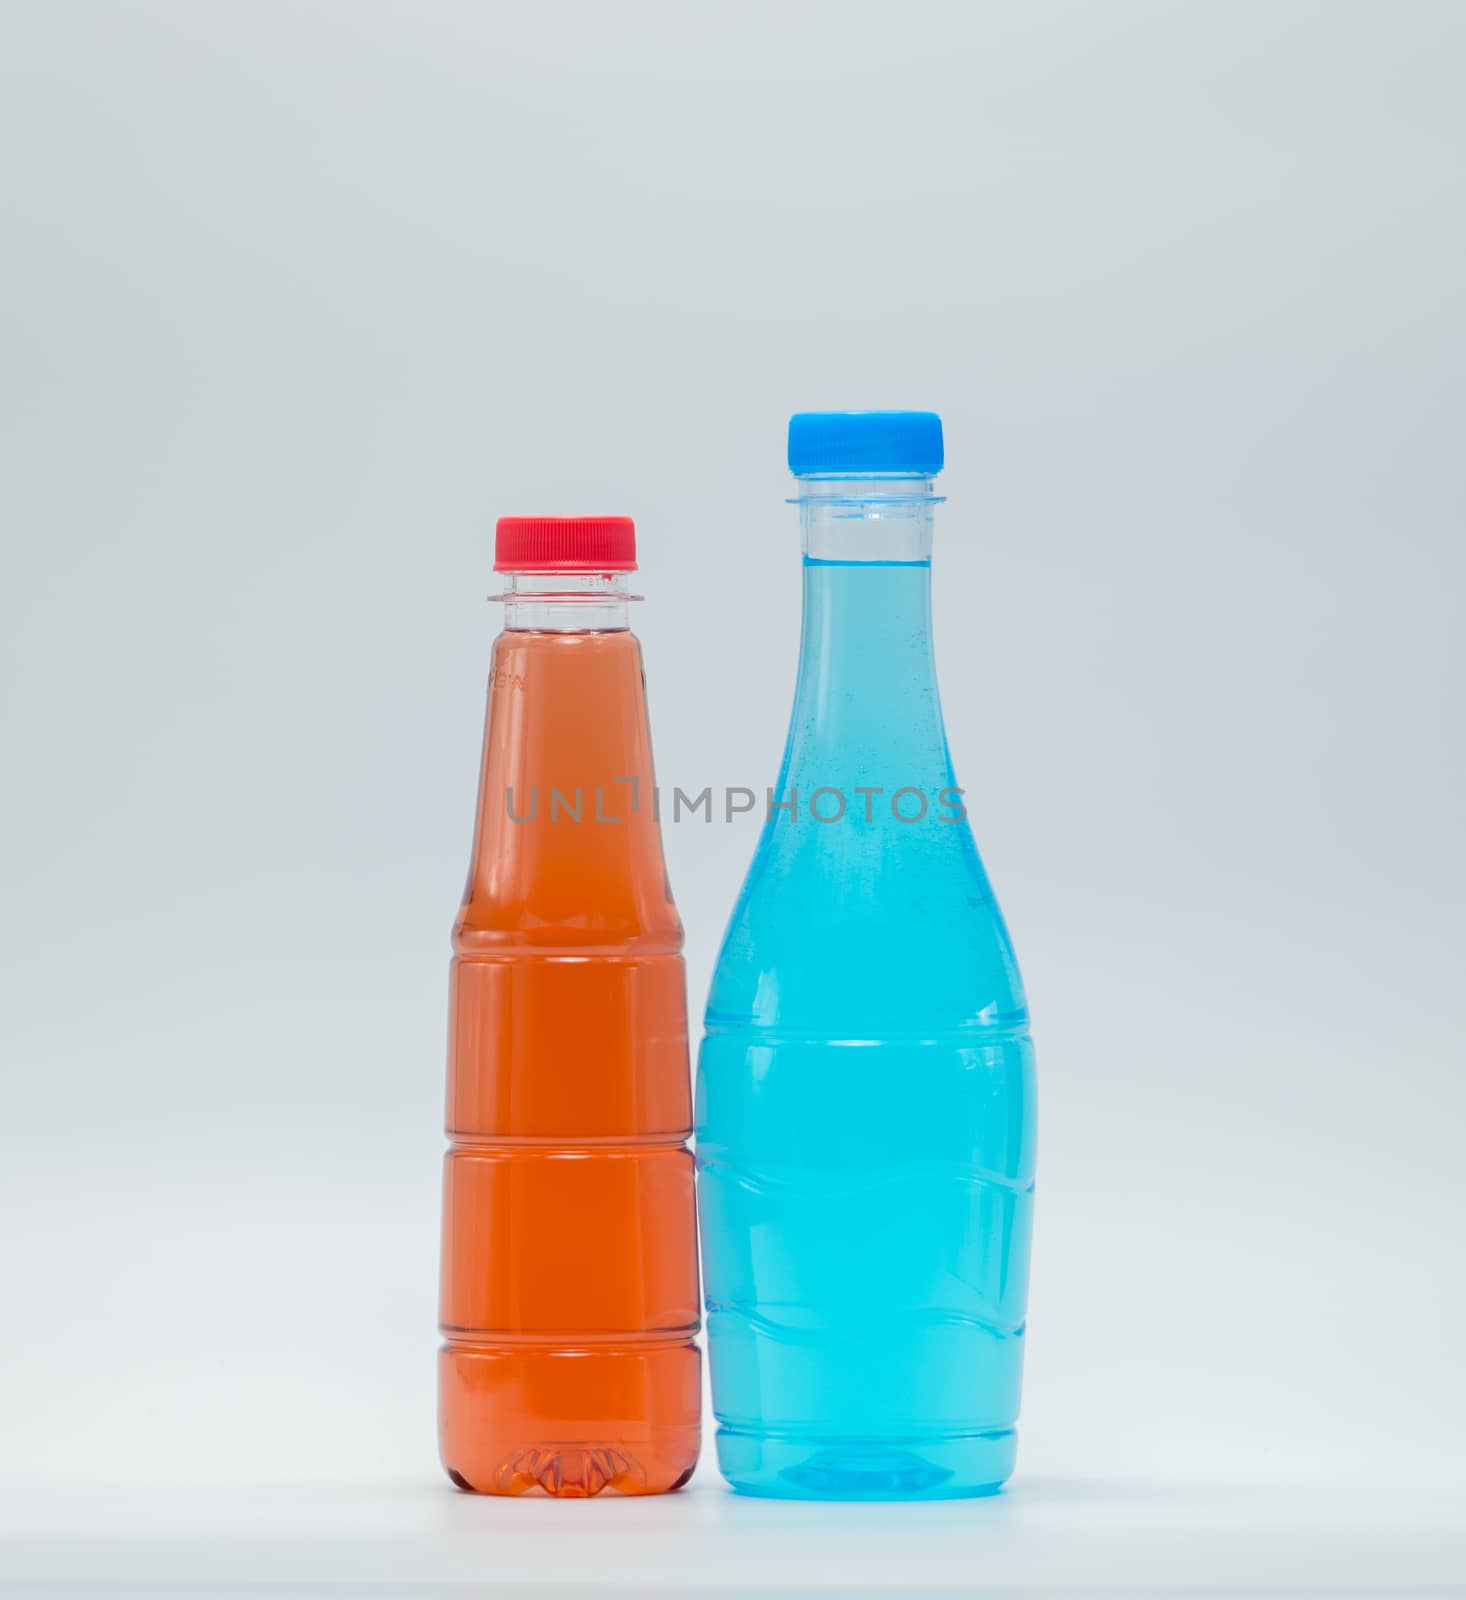 Two modern design bottles of soft drink on white background